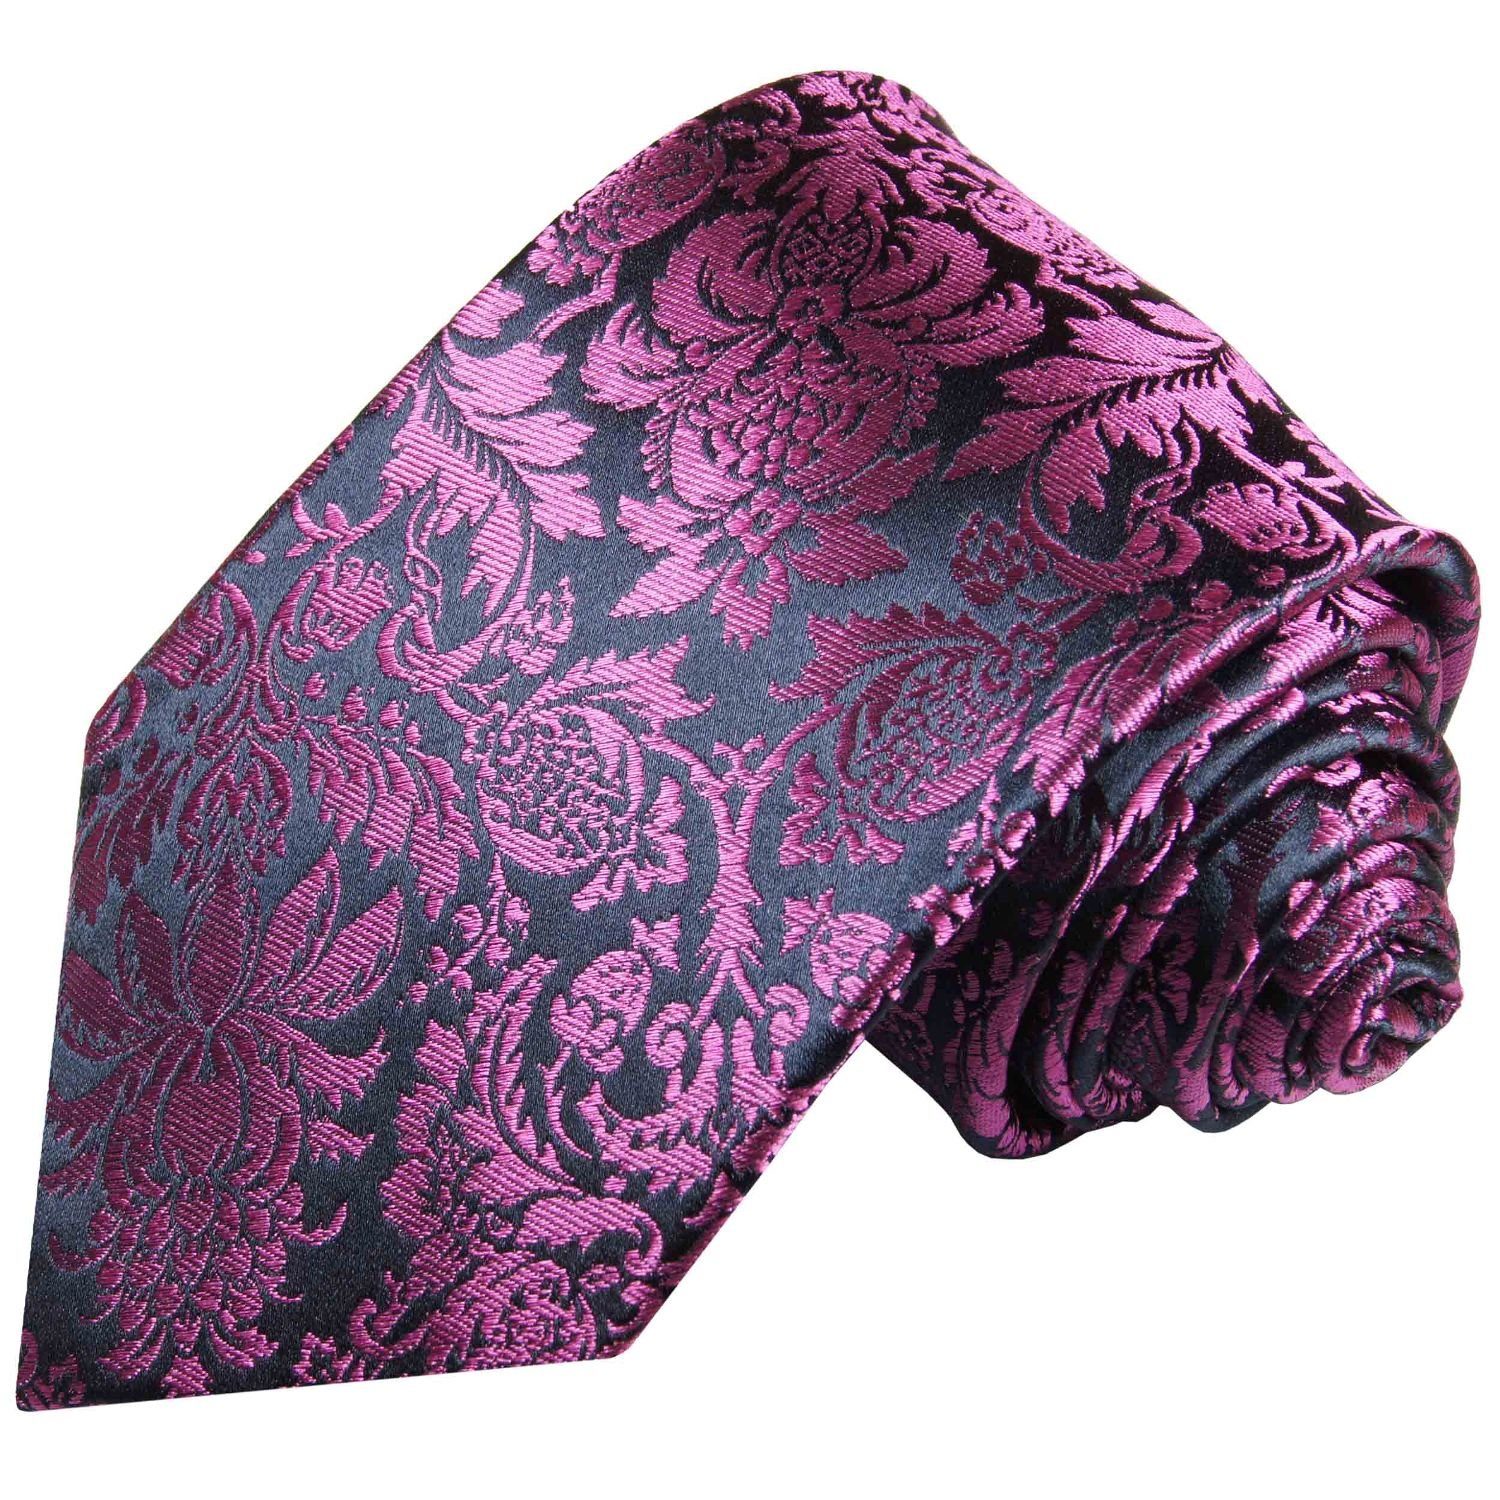 Herren Krawatten Paul Malone Krawatte Designer Seidenkrawatte Herren Schlips modern floral 100% Seide Schmal (6cm), pink blau 68